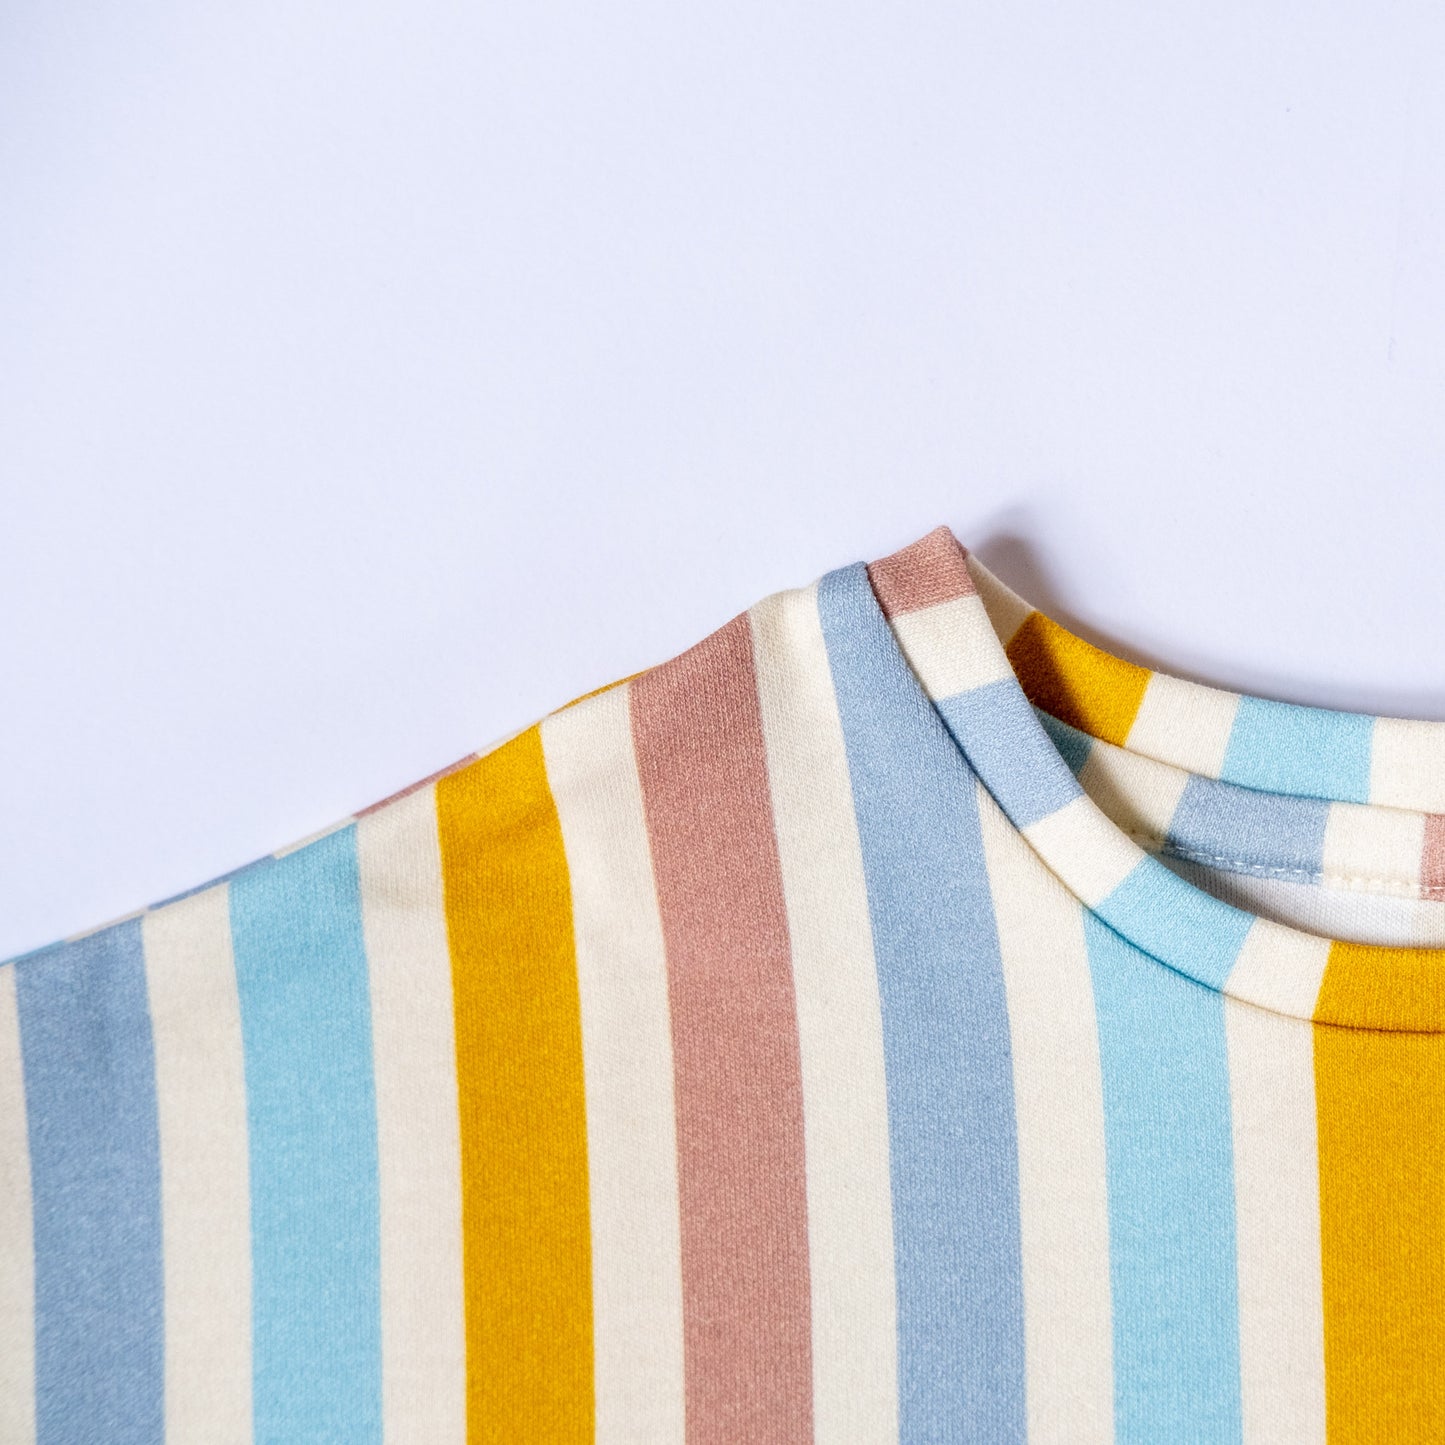 Sunshine Stripe T-shirt